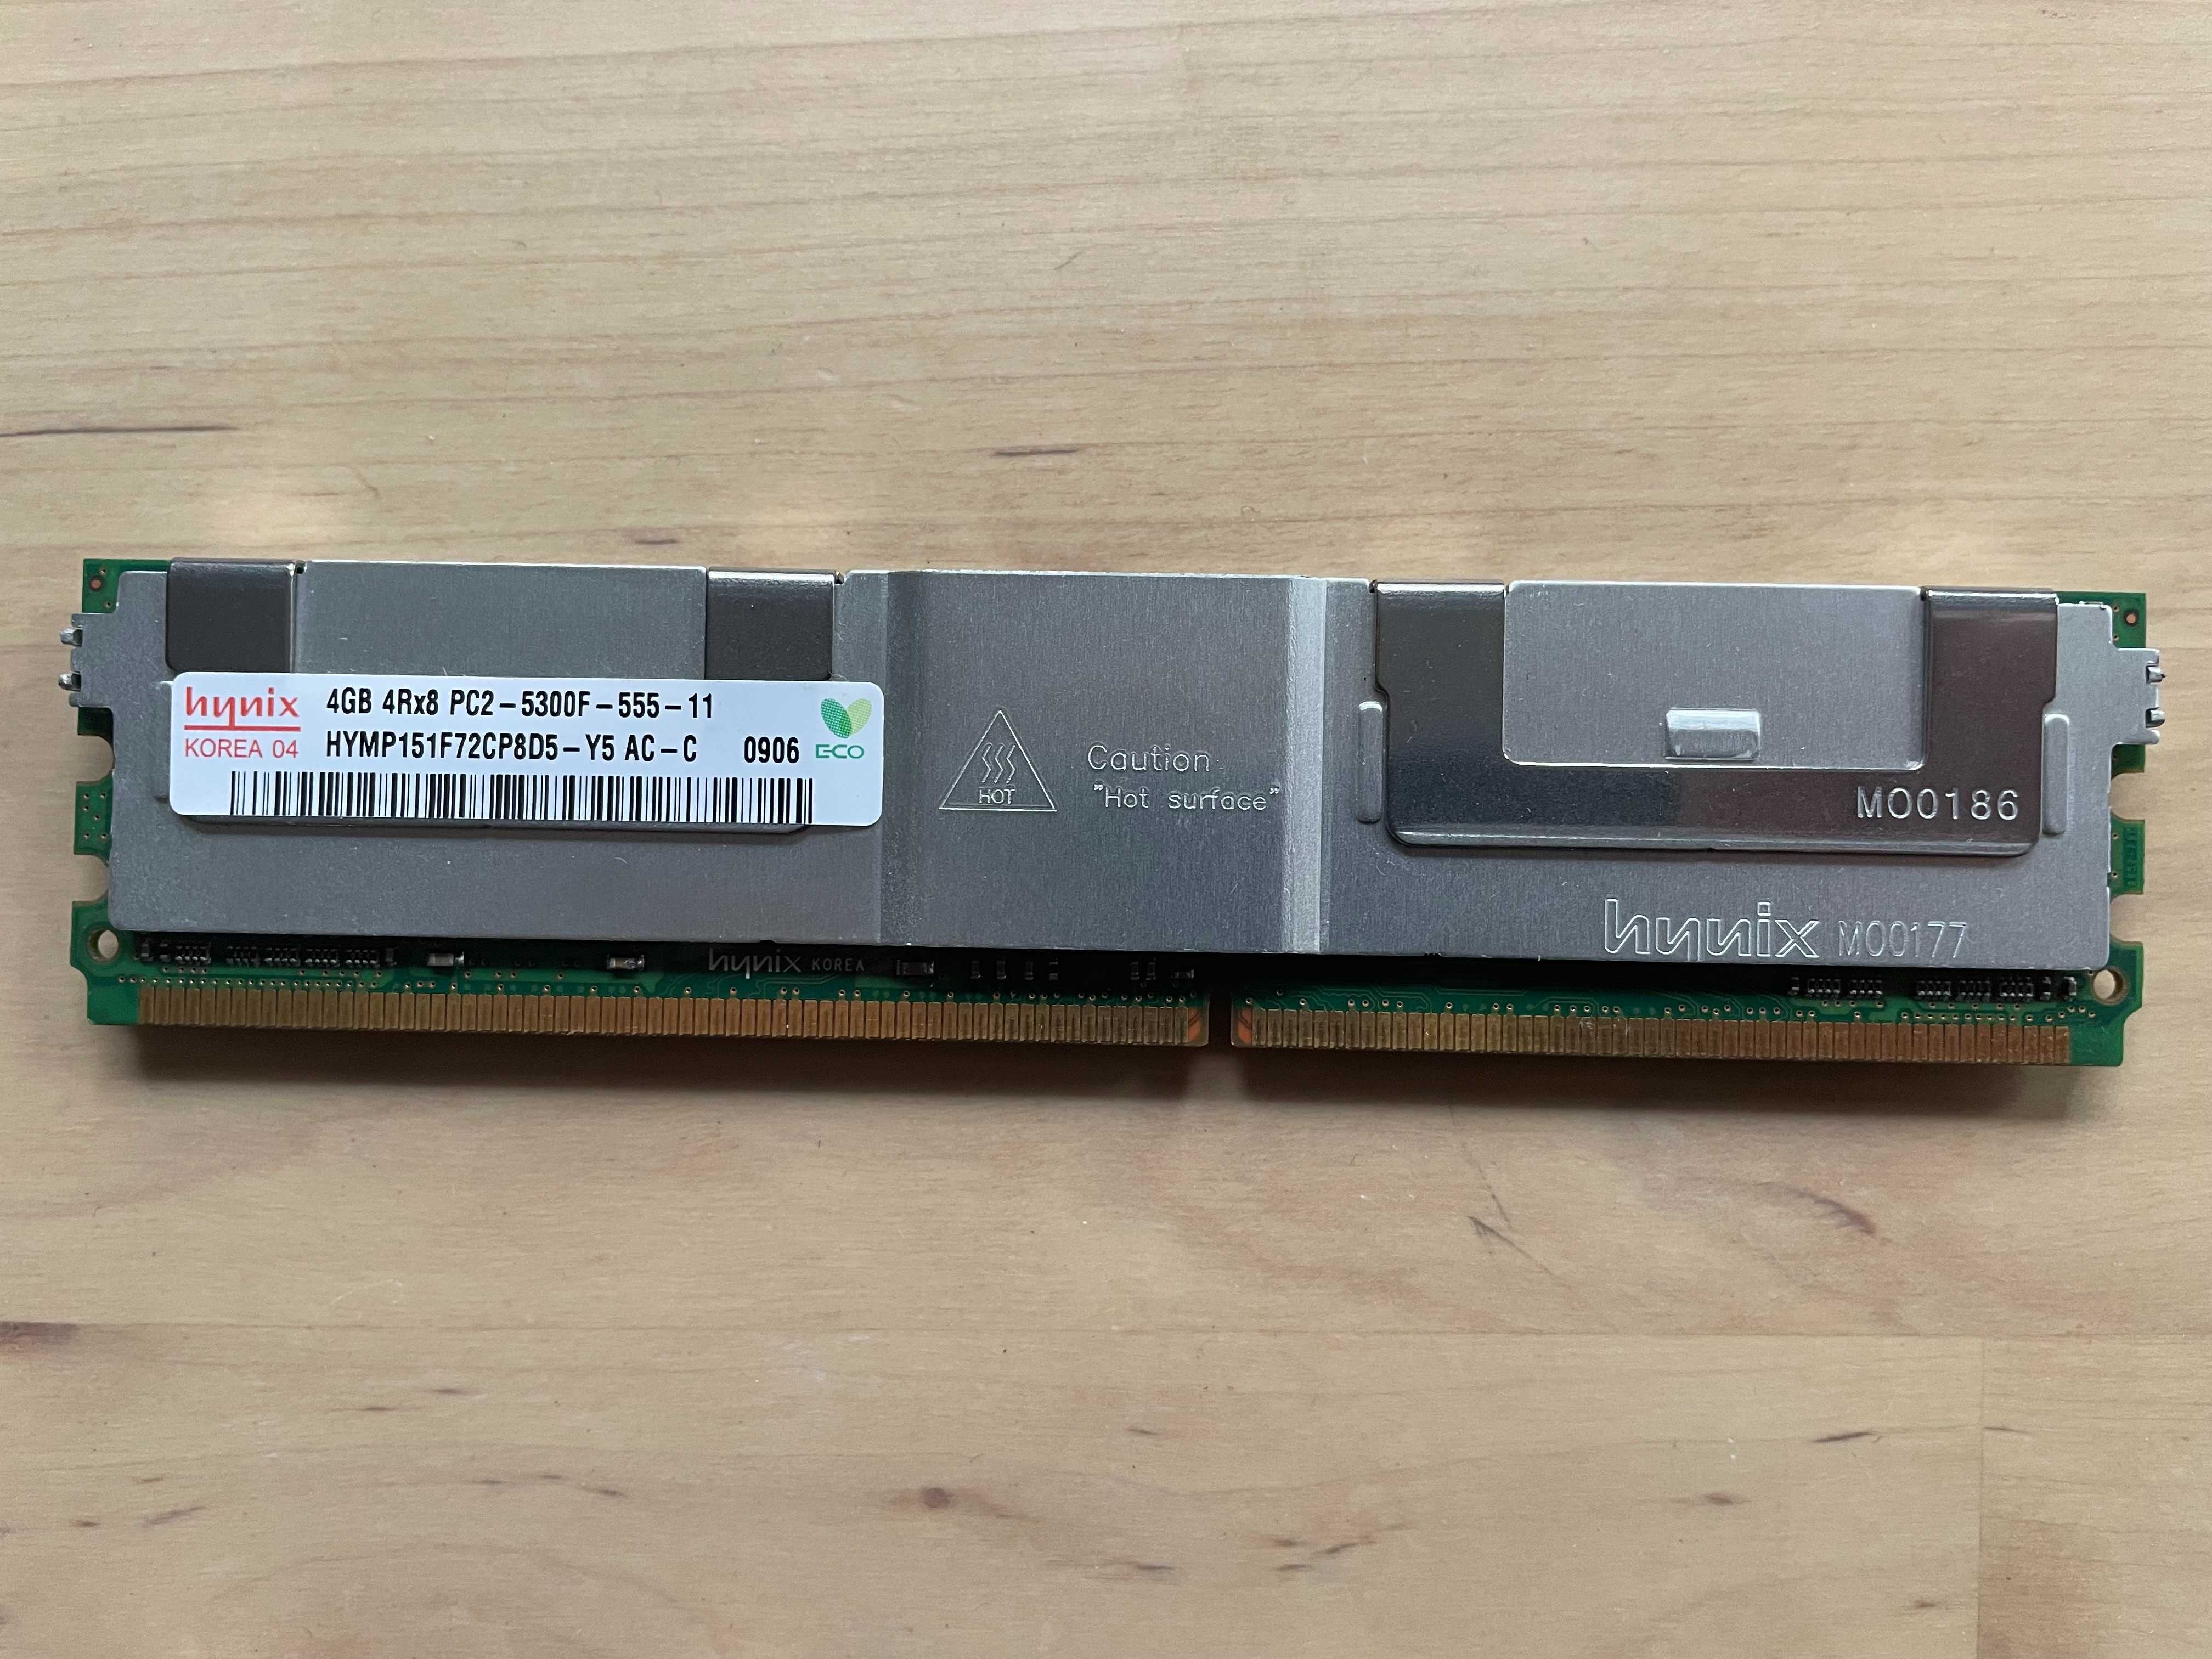 Pamięć RAM HYNIX 4GB 4Rx8 PC2 - 5300F - 555-11 (komplet 4szt.)